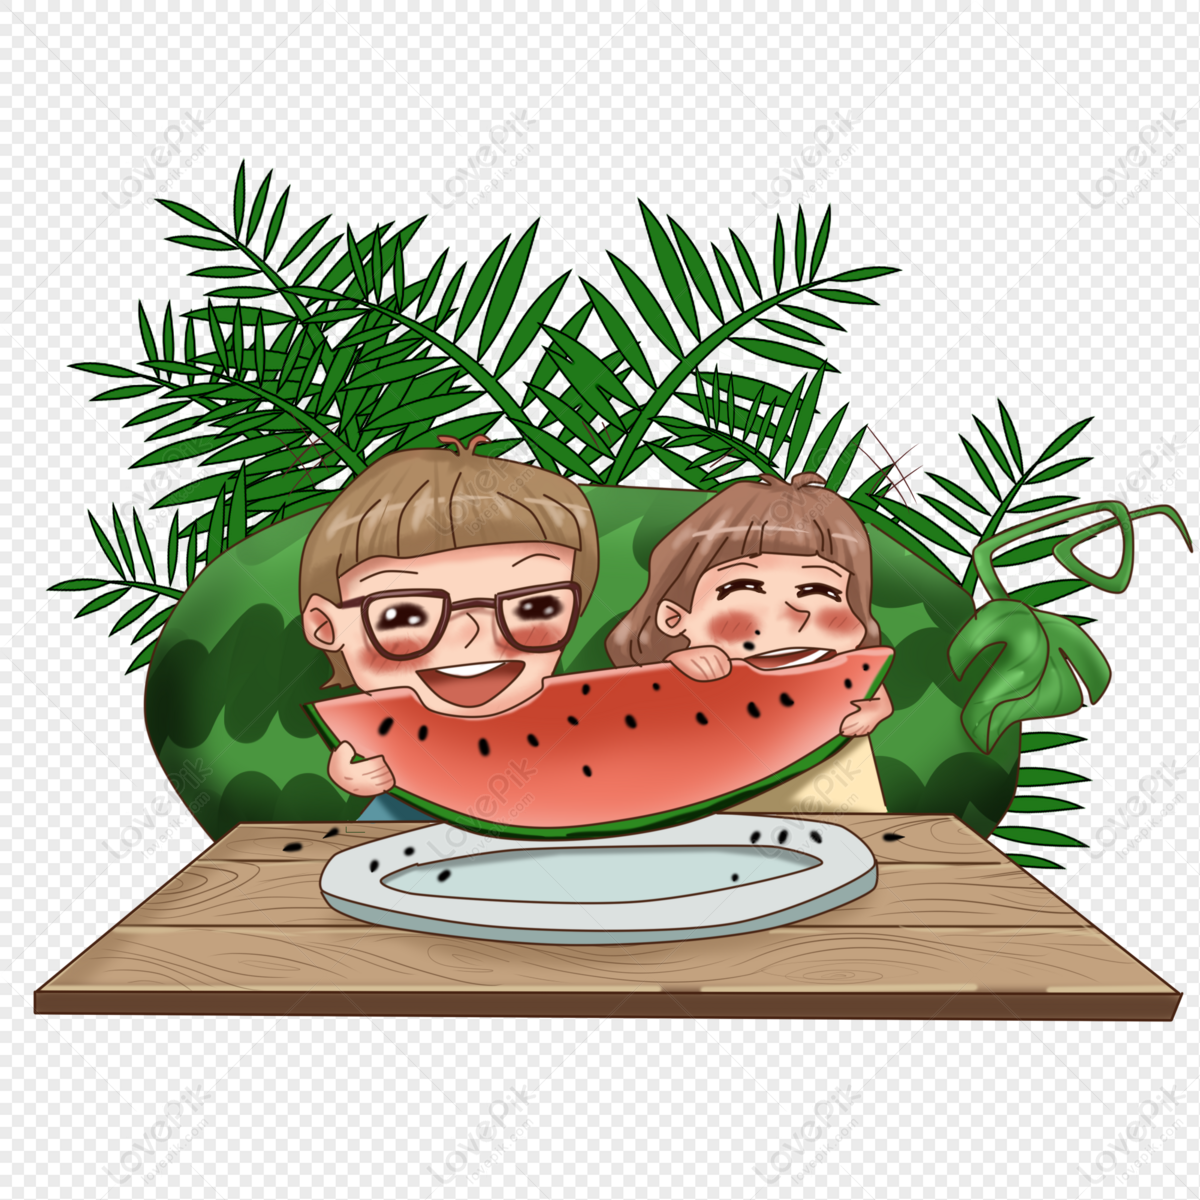 Watermelon Face | Anime Manga Melon Watermelon' Sticker | Spreadshirt